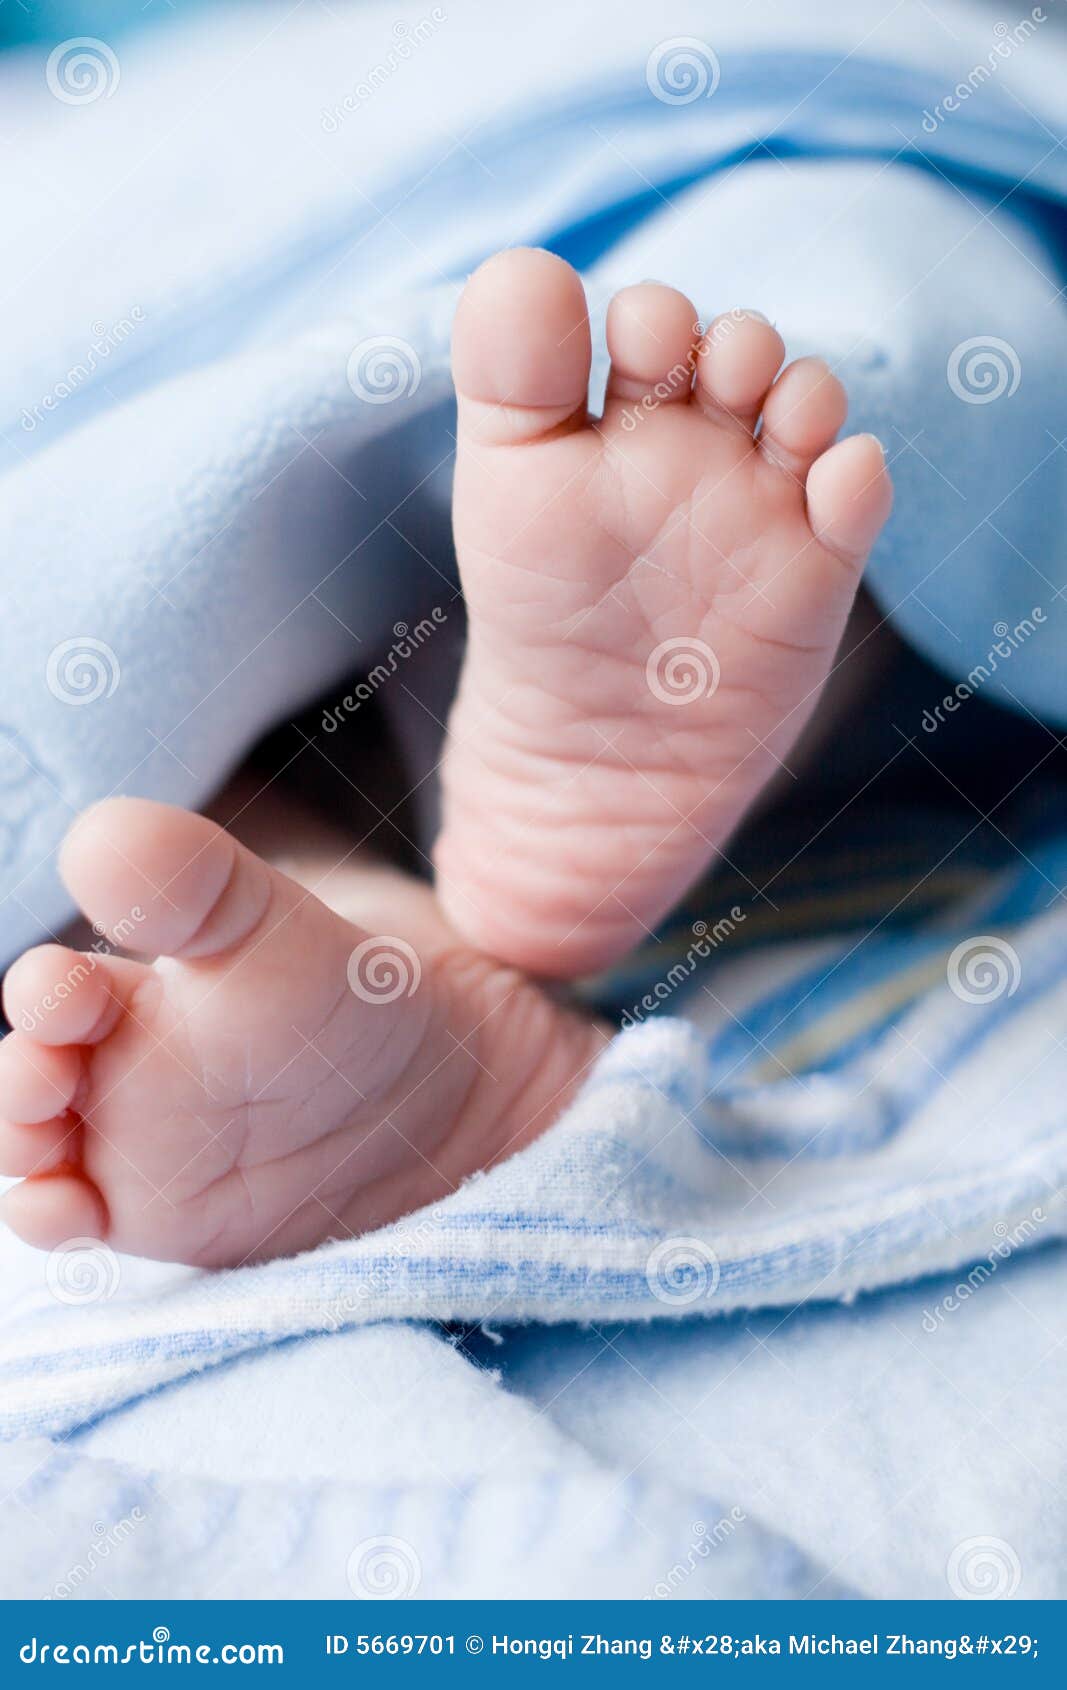 Mini babyfoot xs